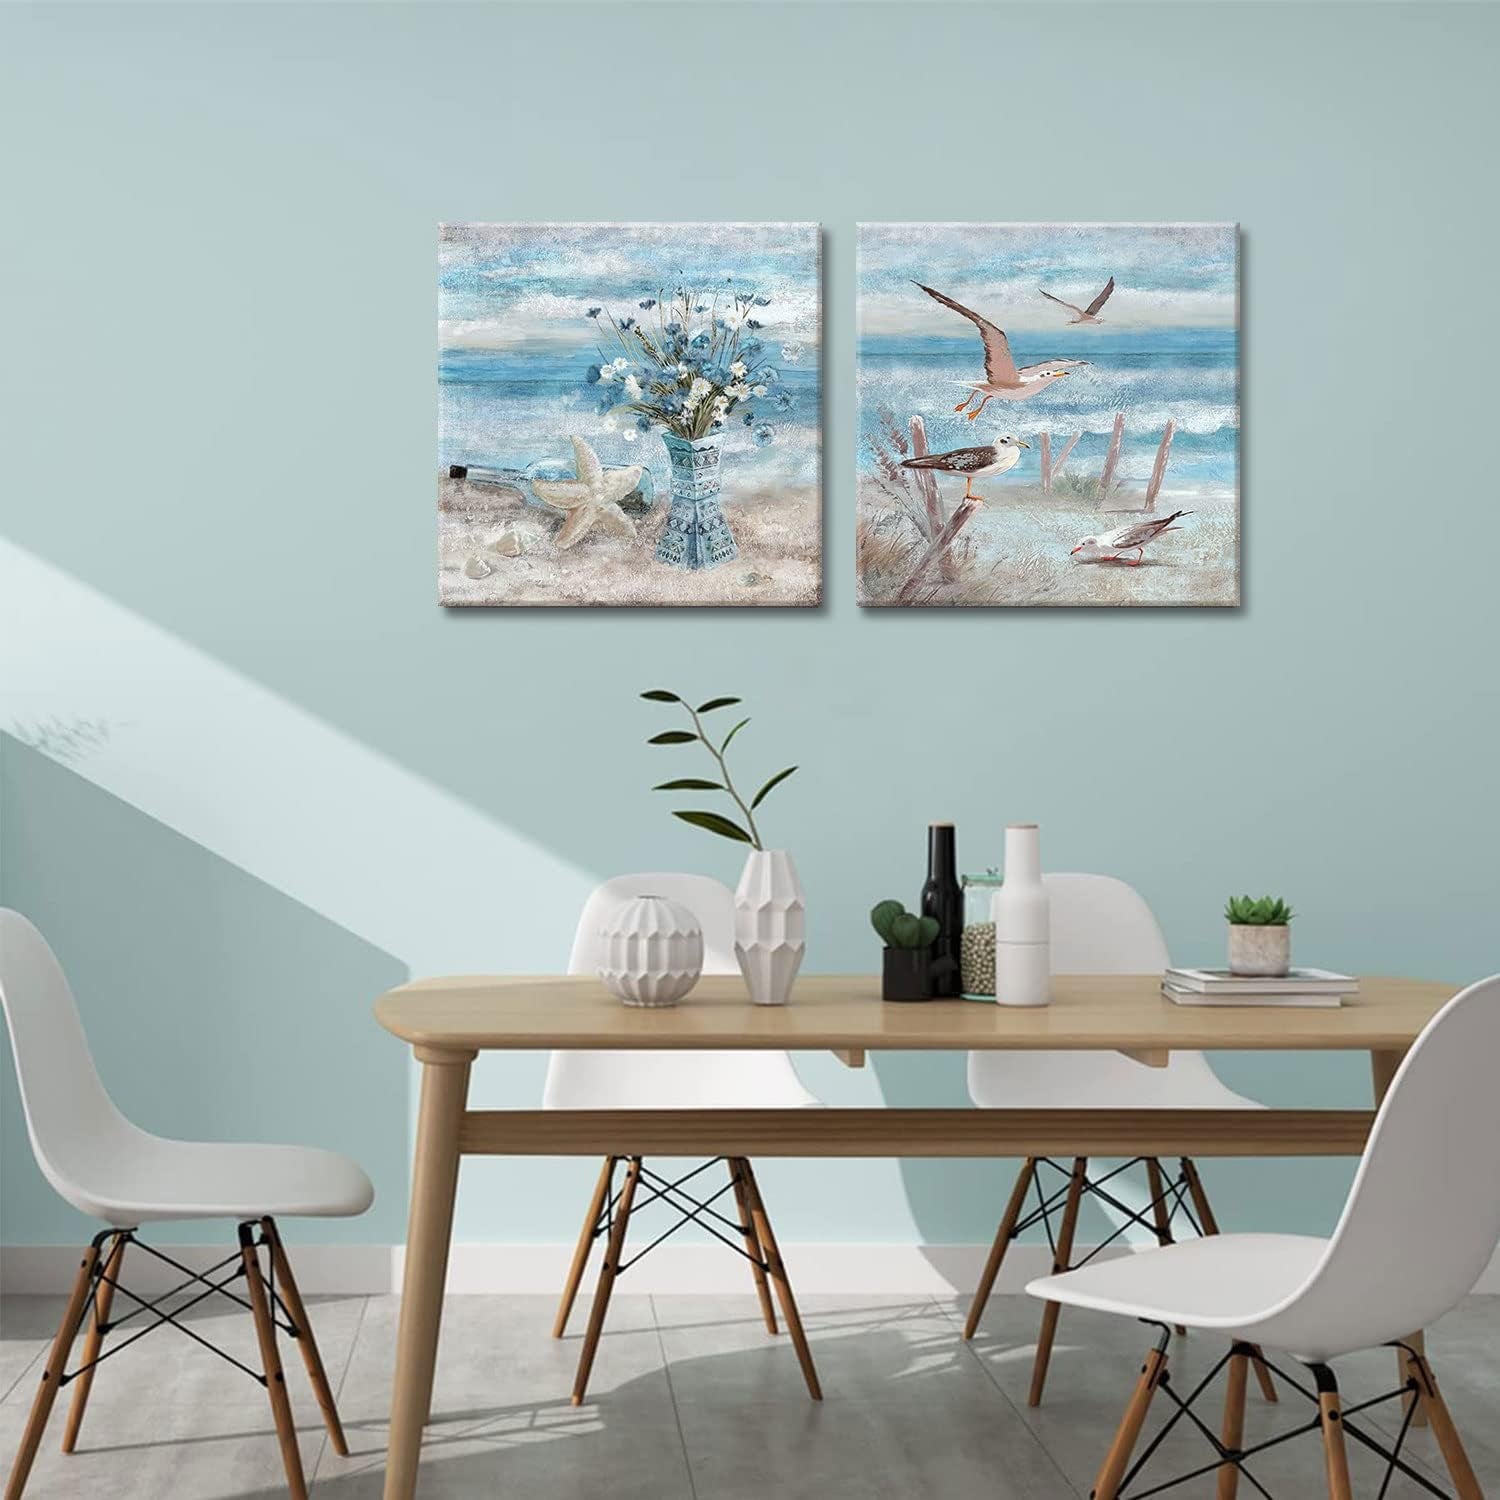  Wall Art Blue Beach Canvas Ocean Theme Ready to Hang Size: 13.5 "× 13.5 "× 2 "